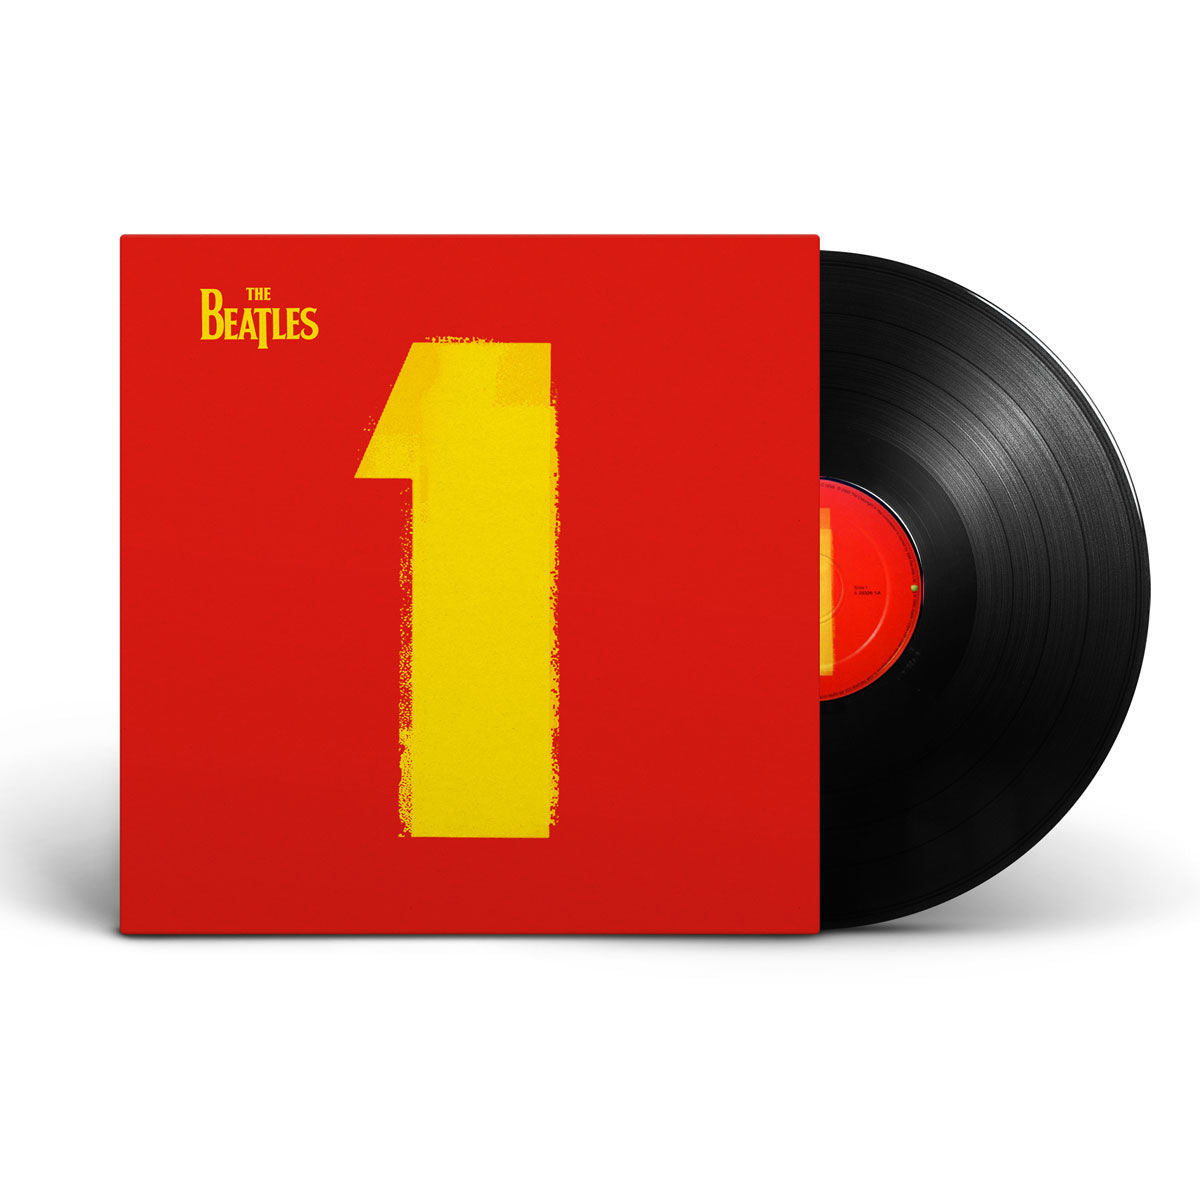 The Beatles - 1 (2015) Gatefold Vinyl 2LP